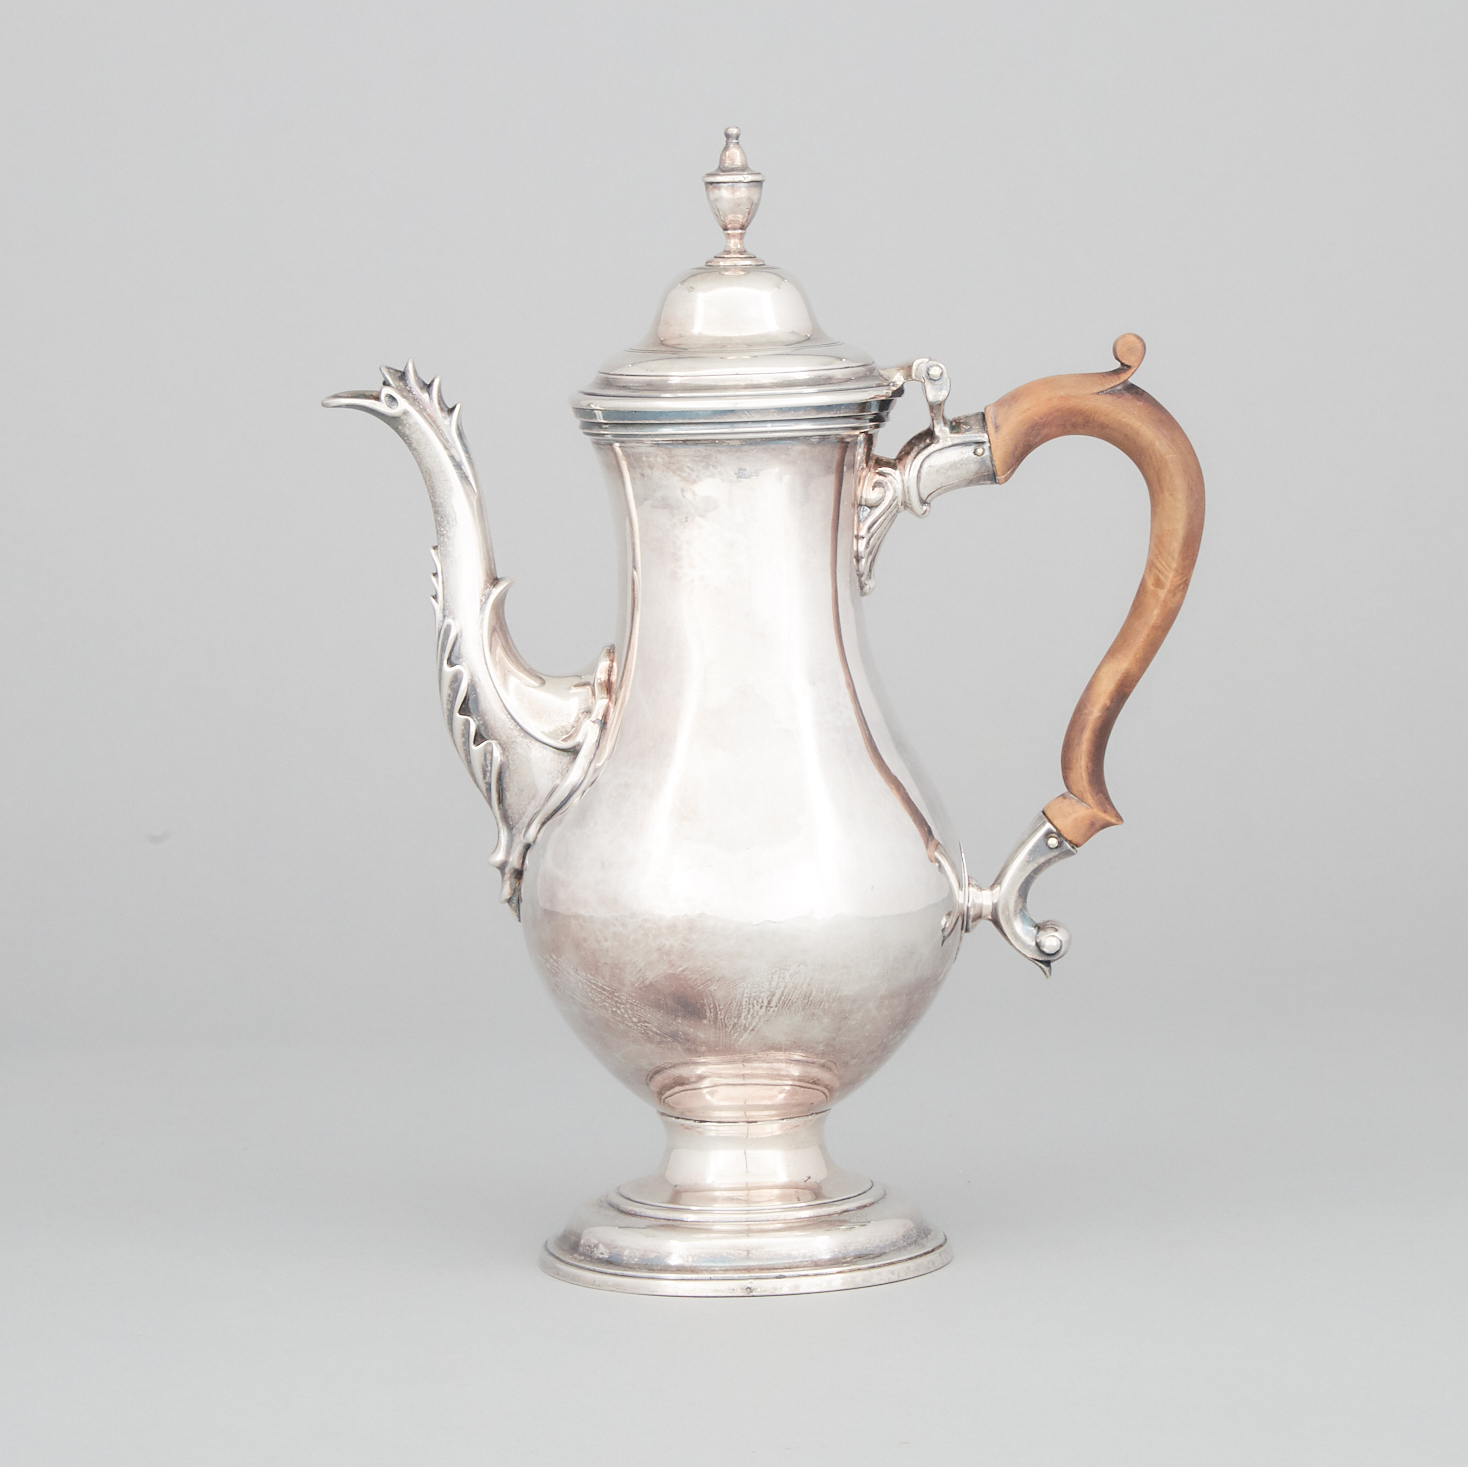 George III Silver Baluster Coffee Pot, William Collings, London, 1775